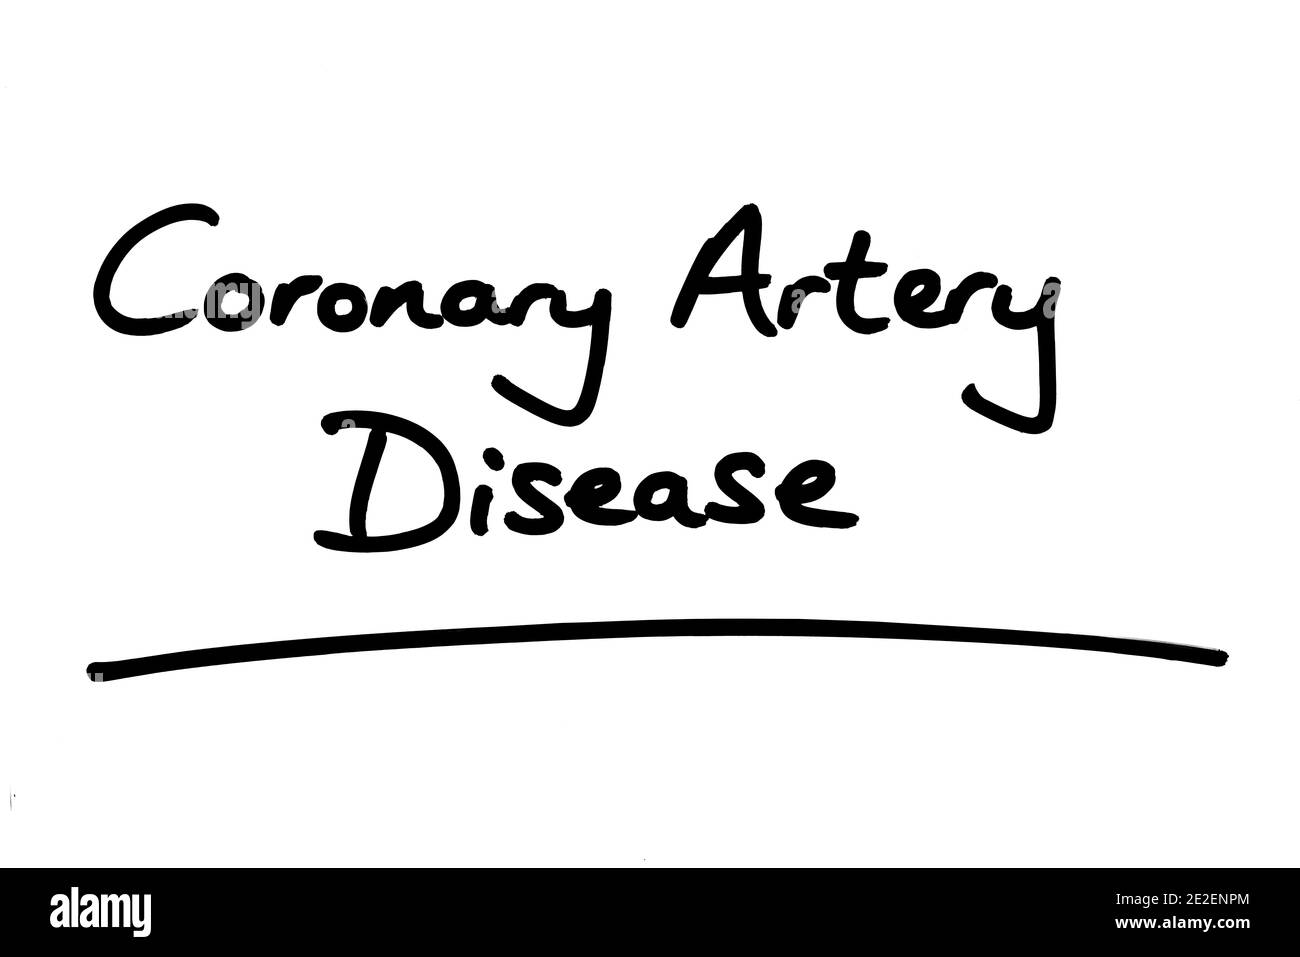 Coronary Artery Disease, handwritten on a white background. Stock Photo